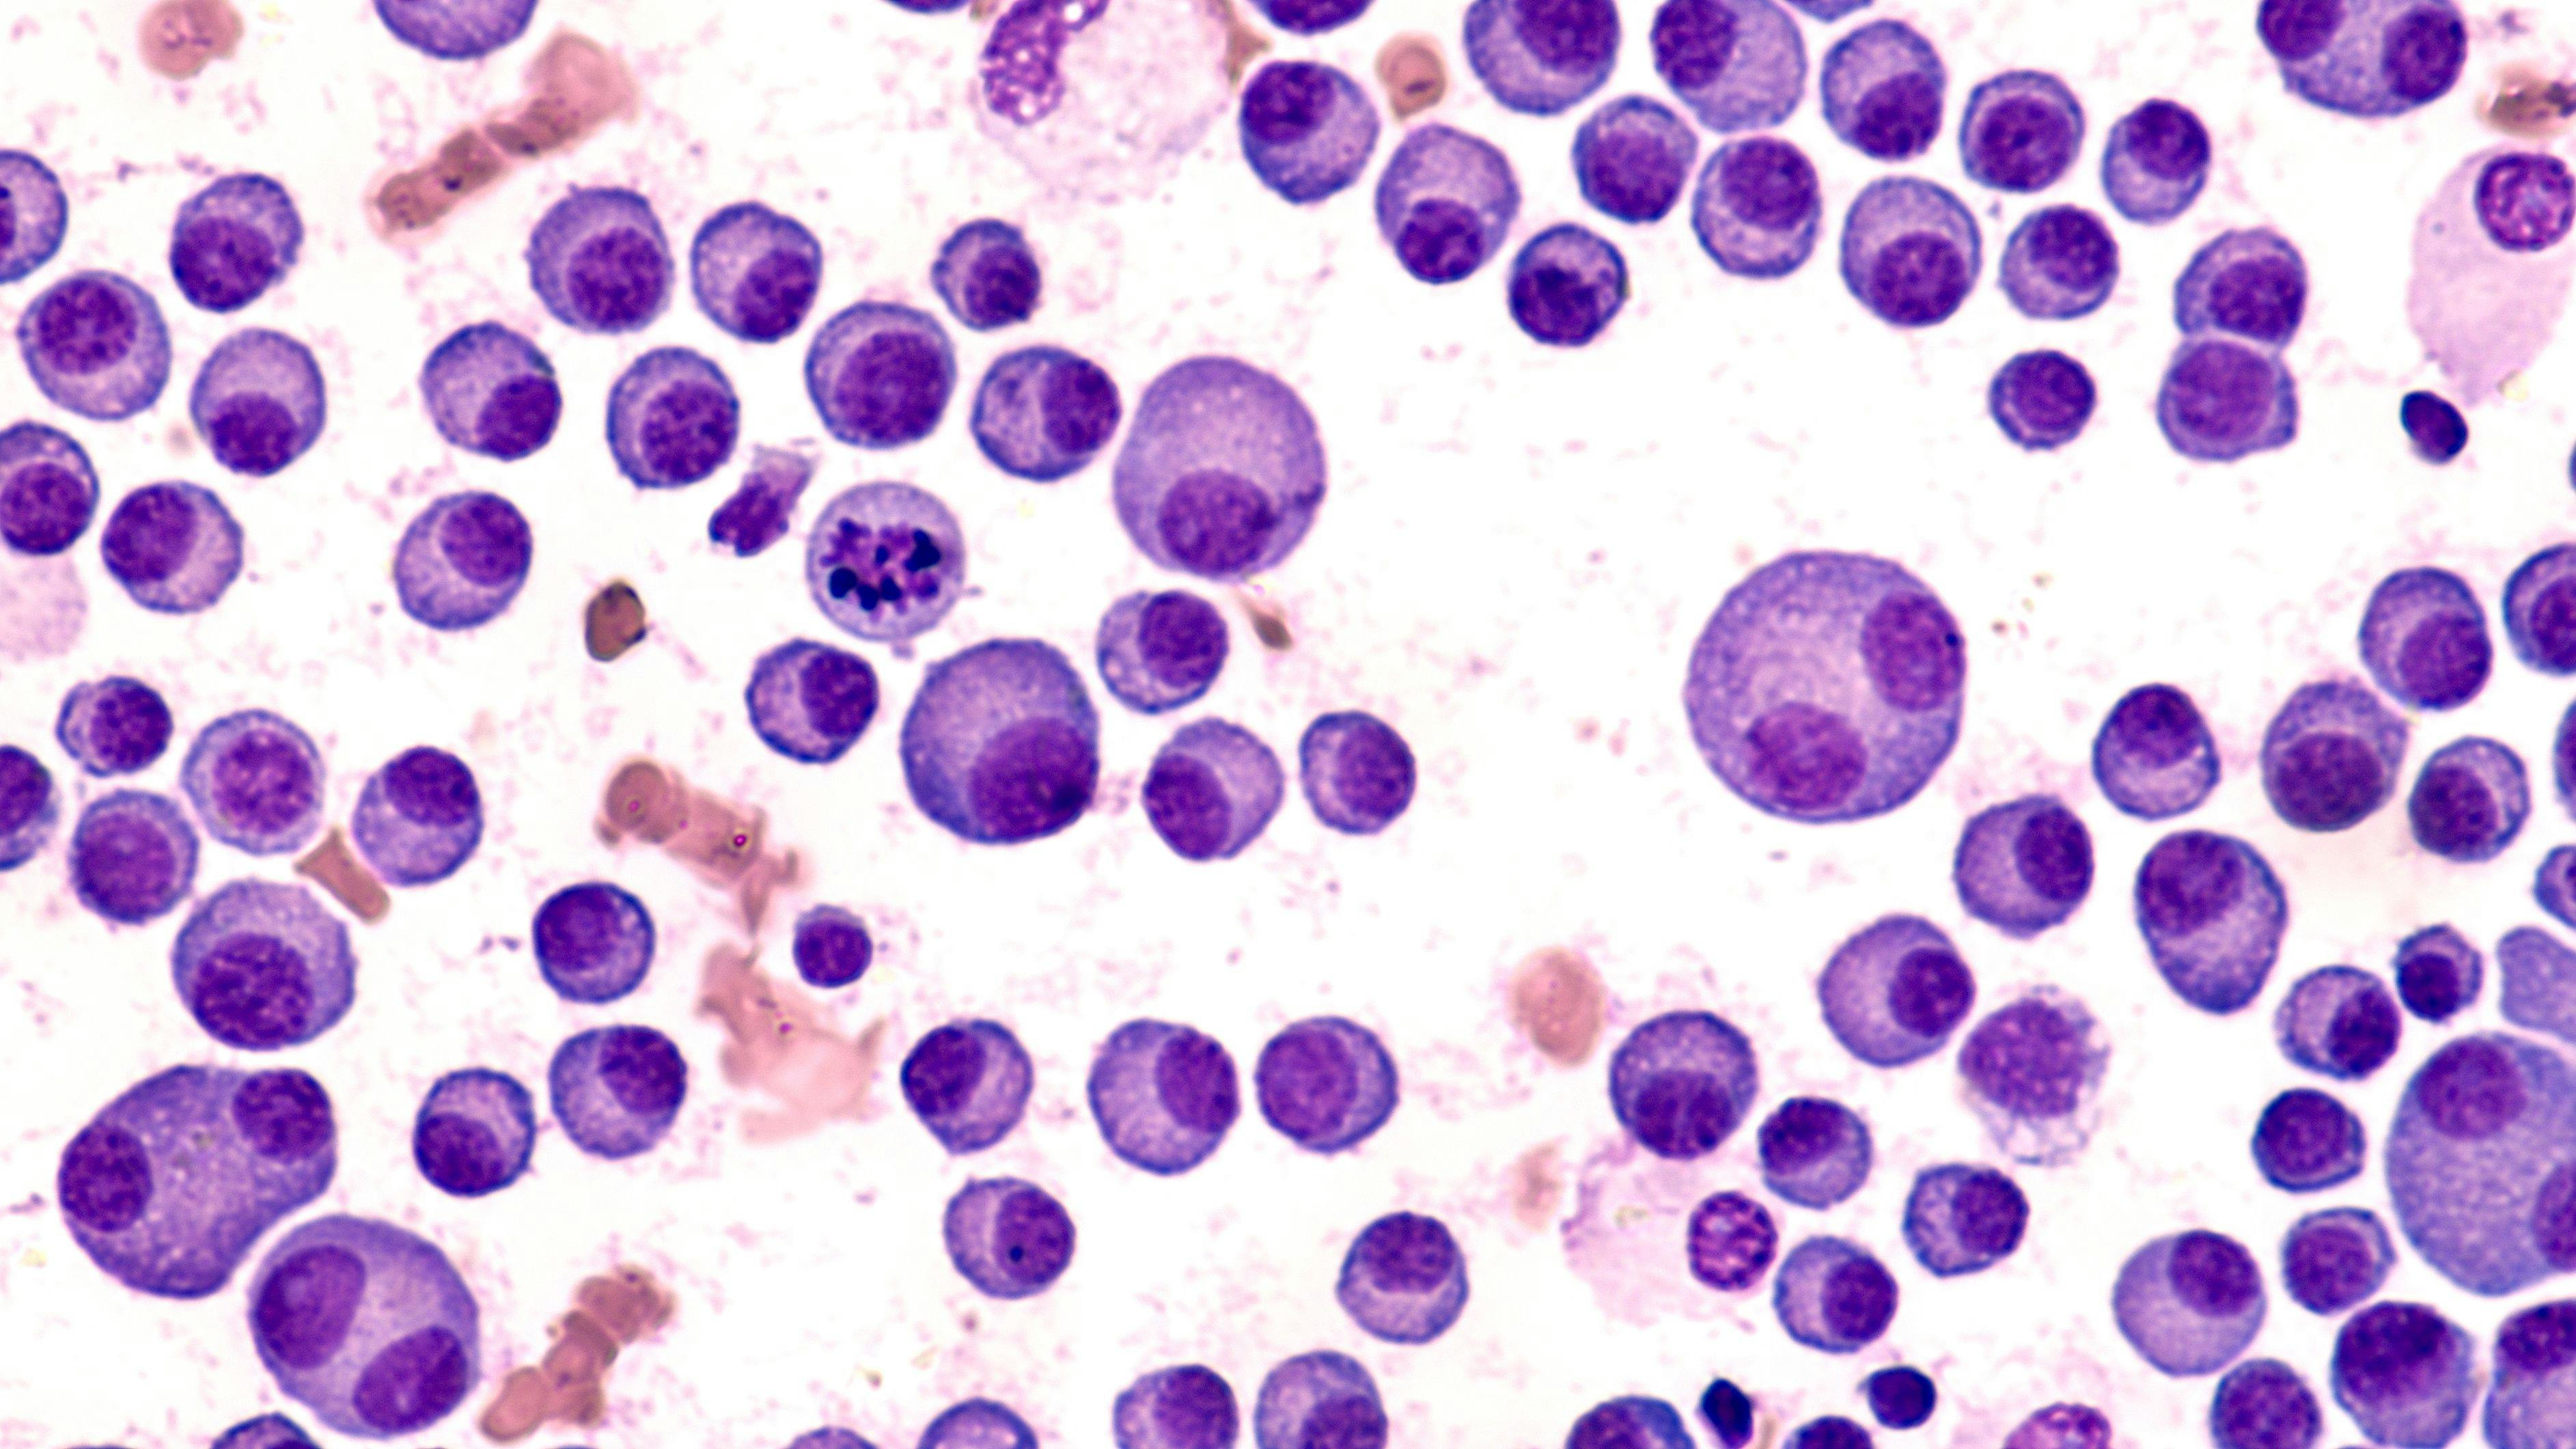 Bone marrow aspirate cytology of multiple myeloma: ©David A Litman - stock.adobe.com